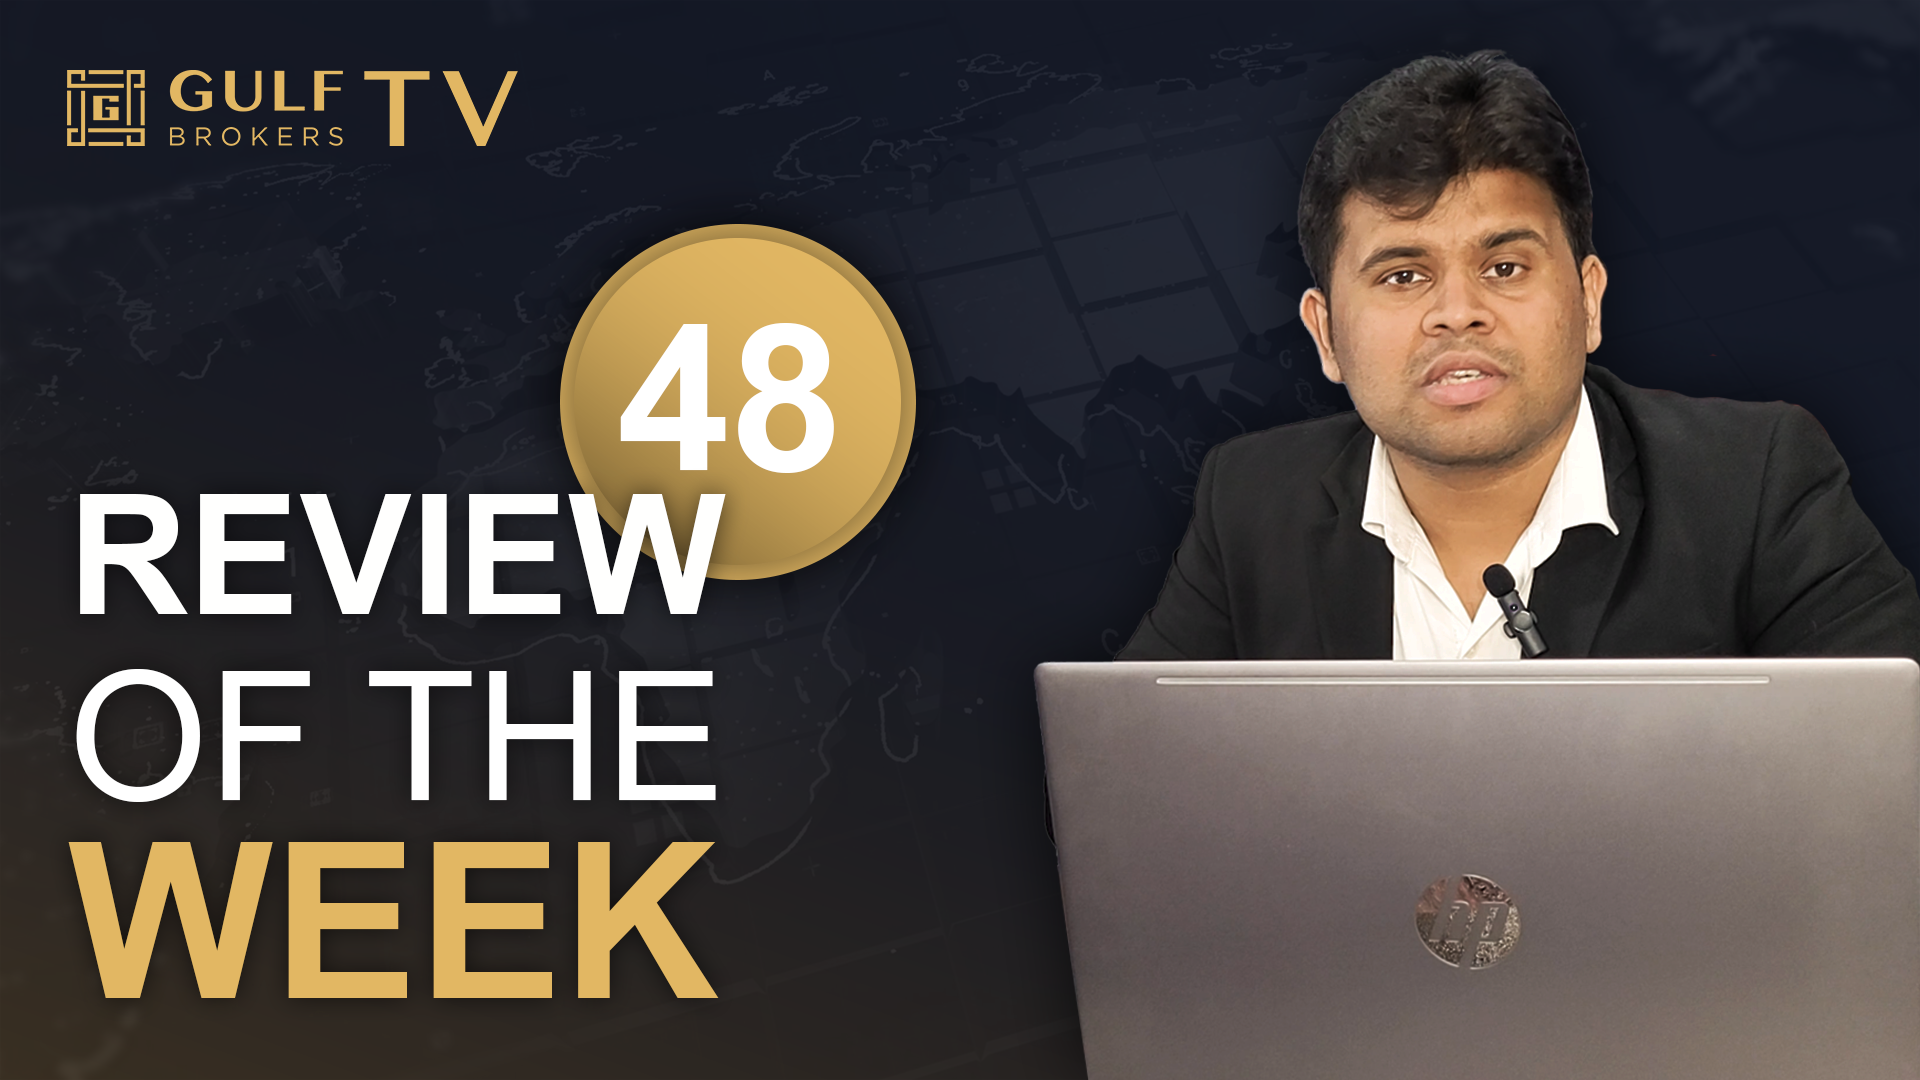 Gulfbrokers | Gulf Brokers | Review of the week 48 | Syam KP